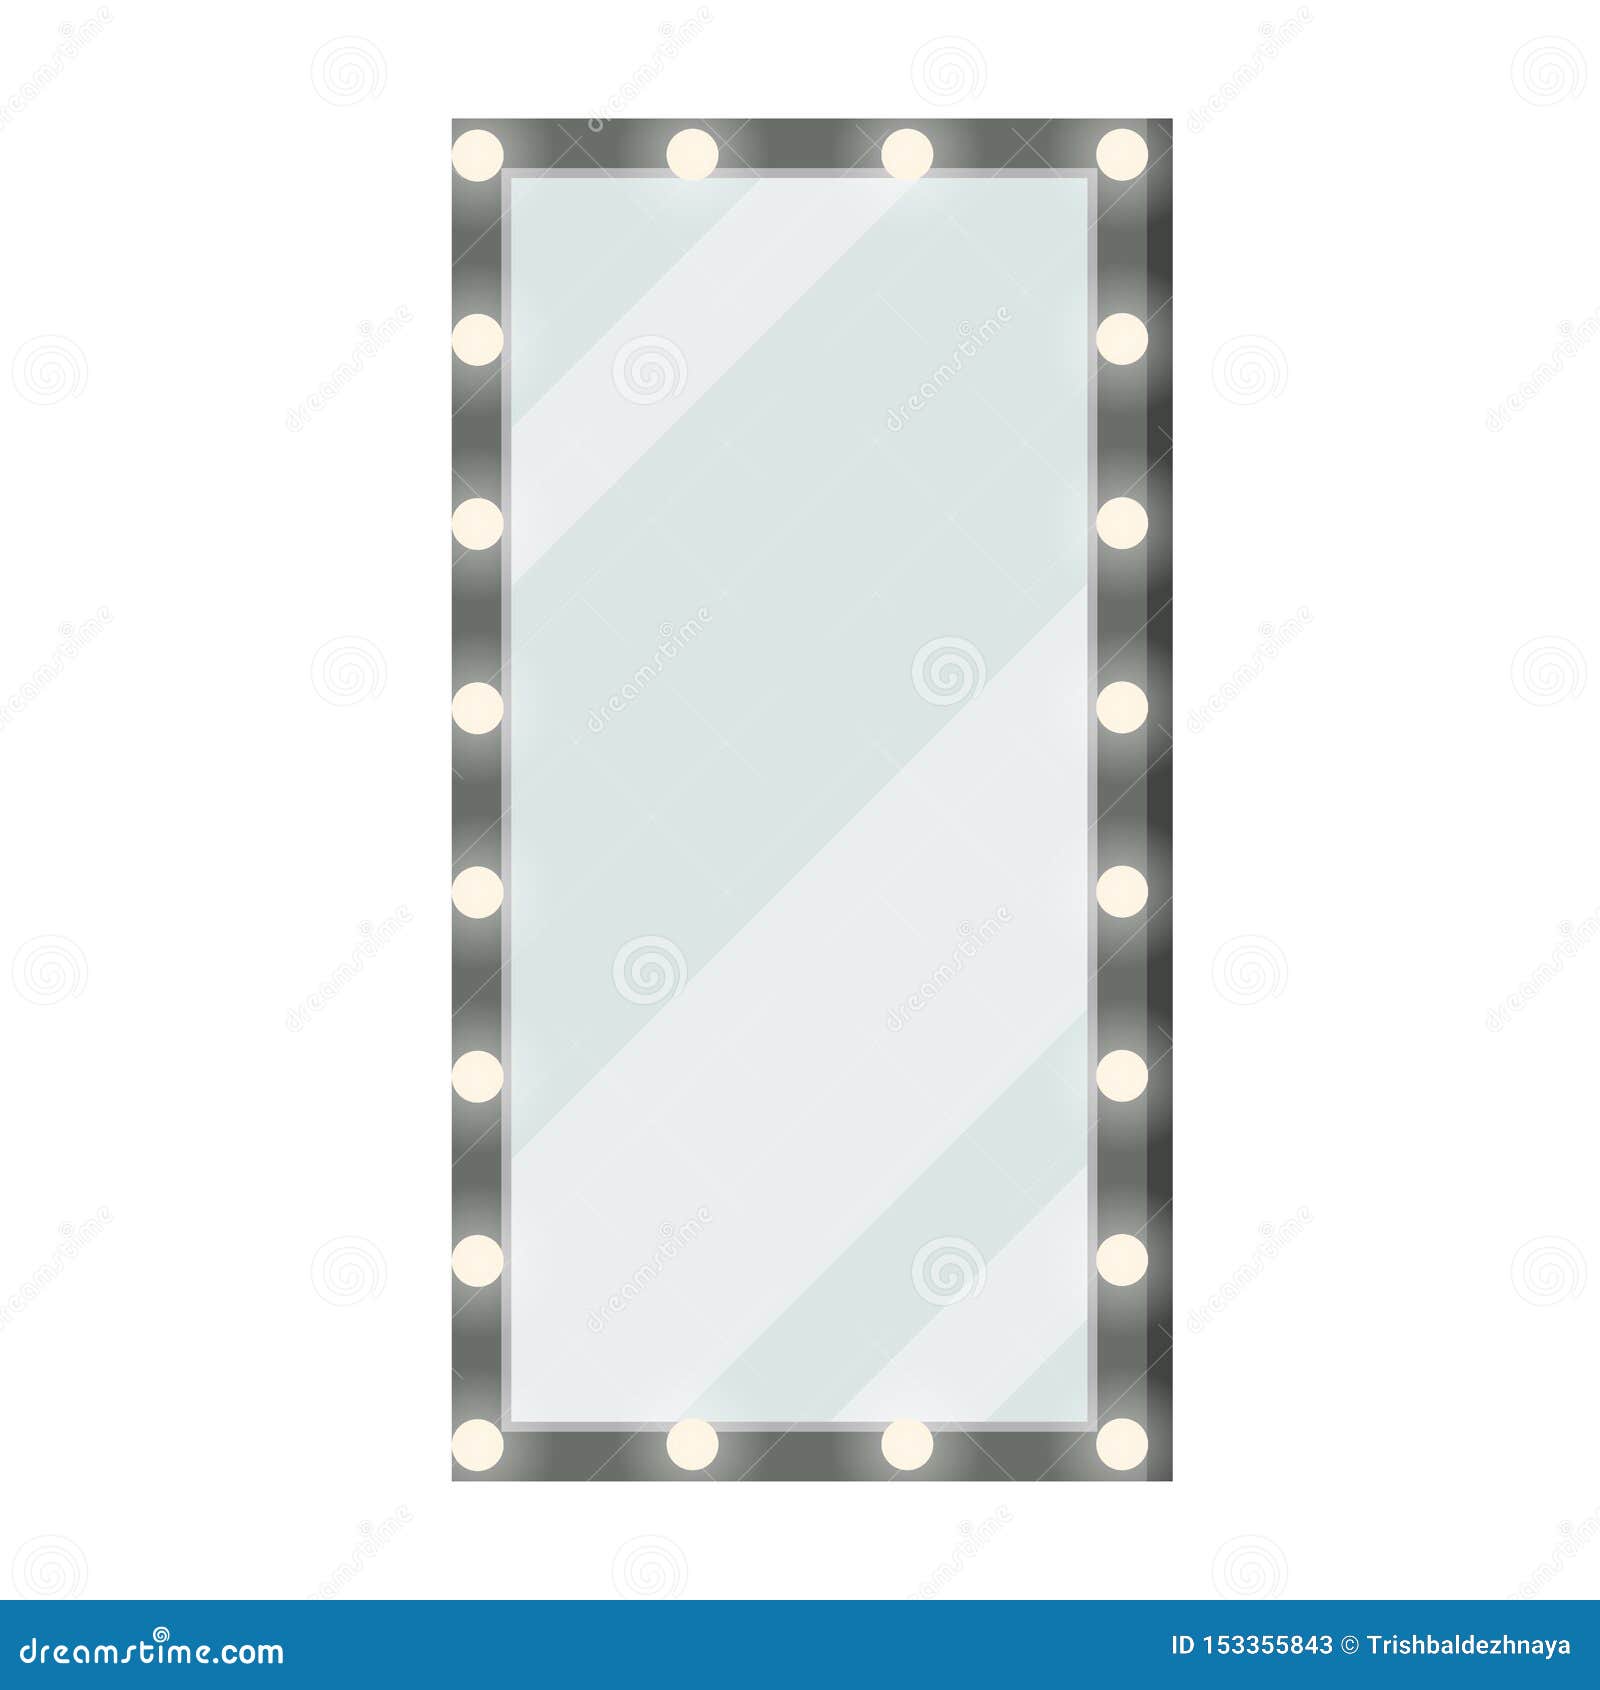 Women Bedroom or Backstage Dressing Room Interior- Makeup Illuminated Floor  or Wall Mirror Stock Vector - Illustration of interior, object: 153355843